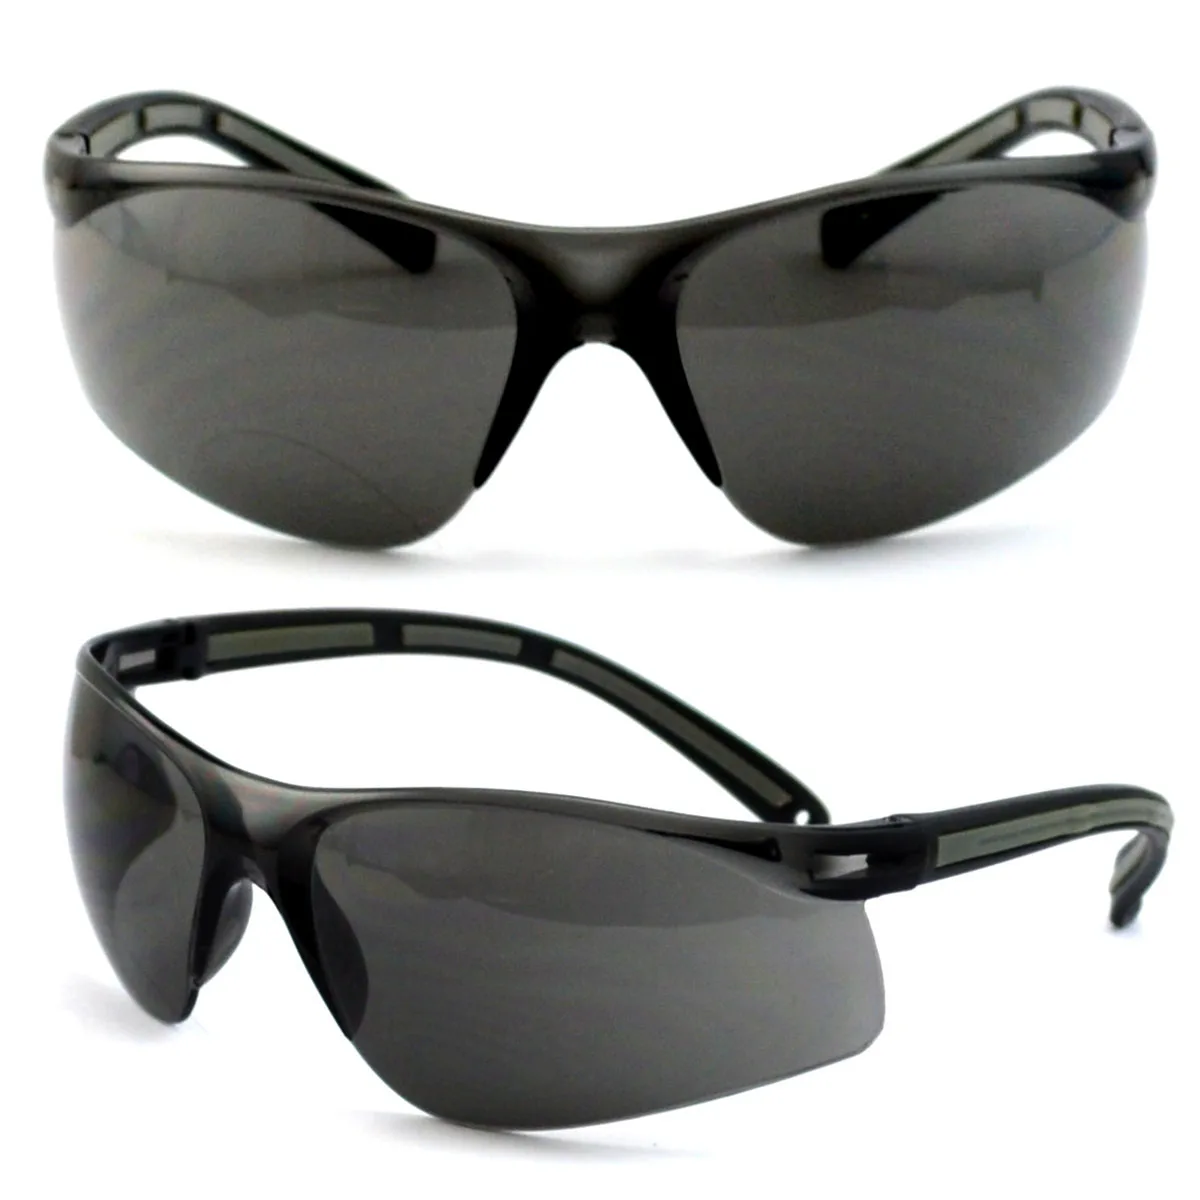 
Industrial Welding z87.1 safety Glasses Sunglasses Block Strong Light 